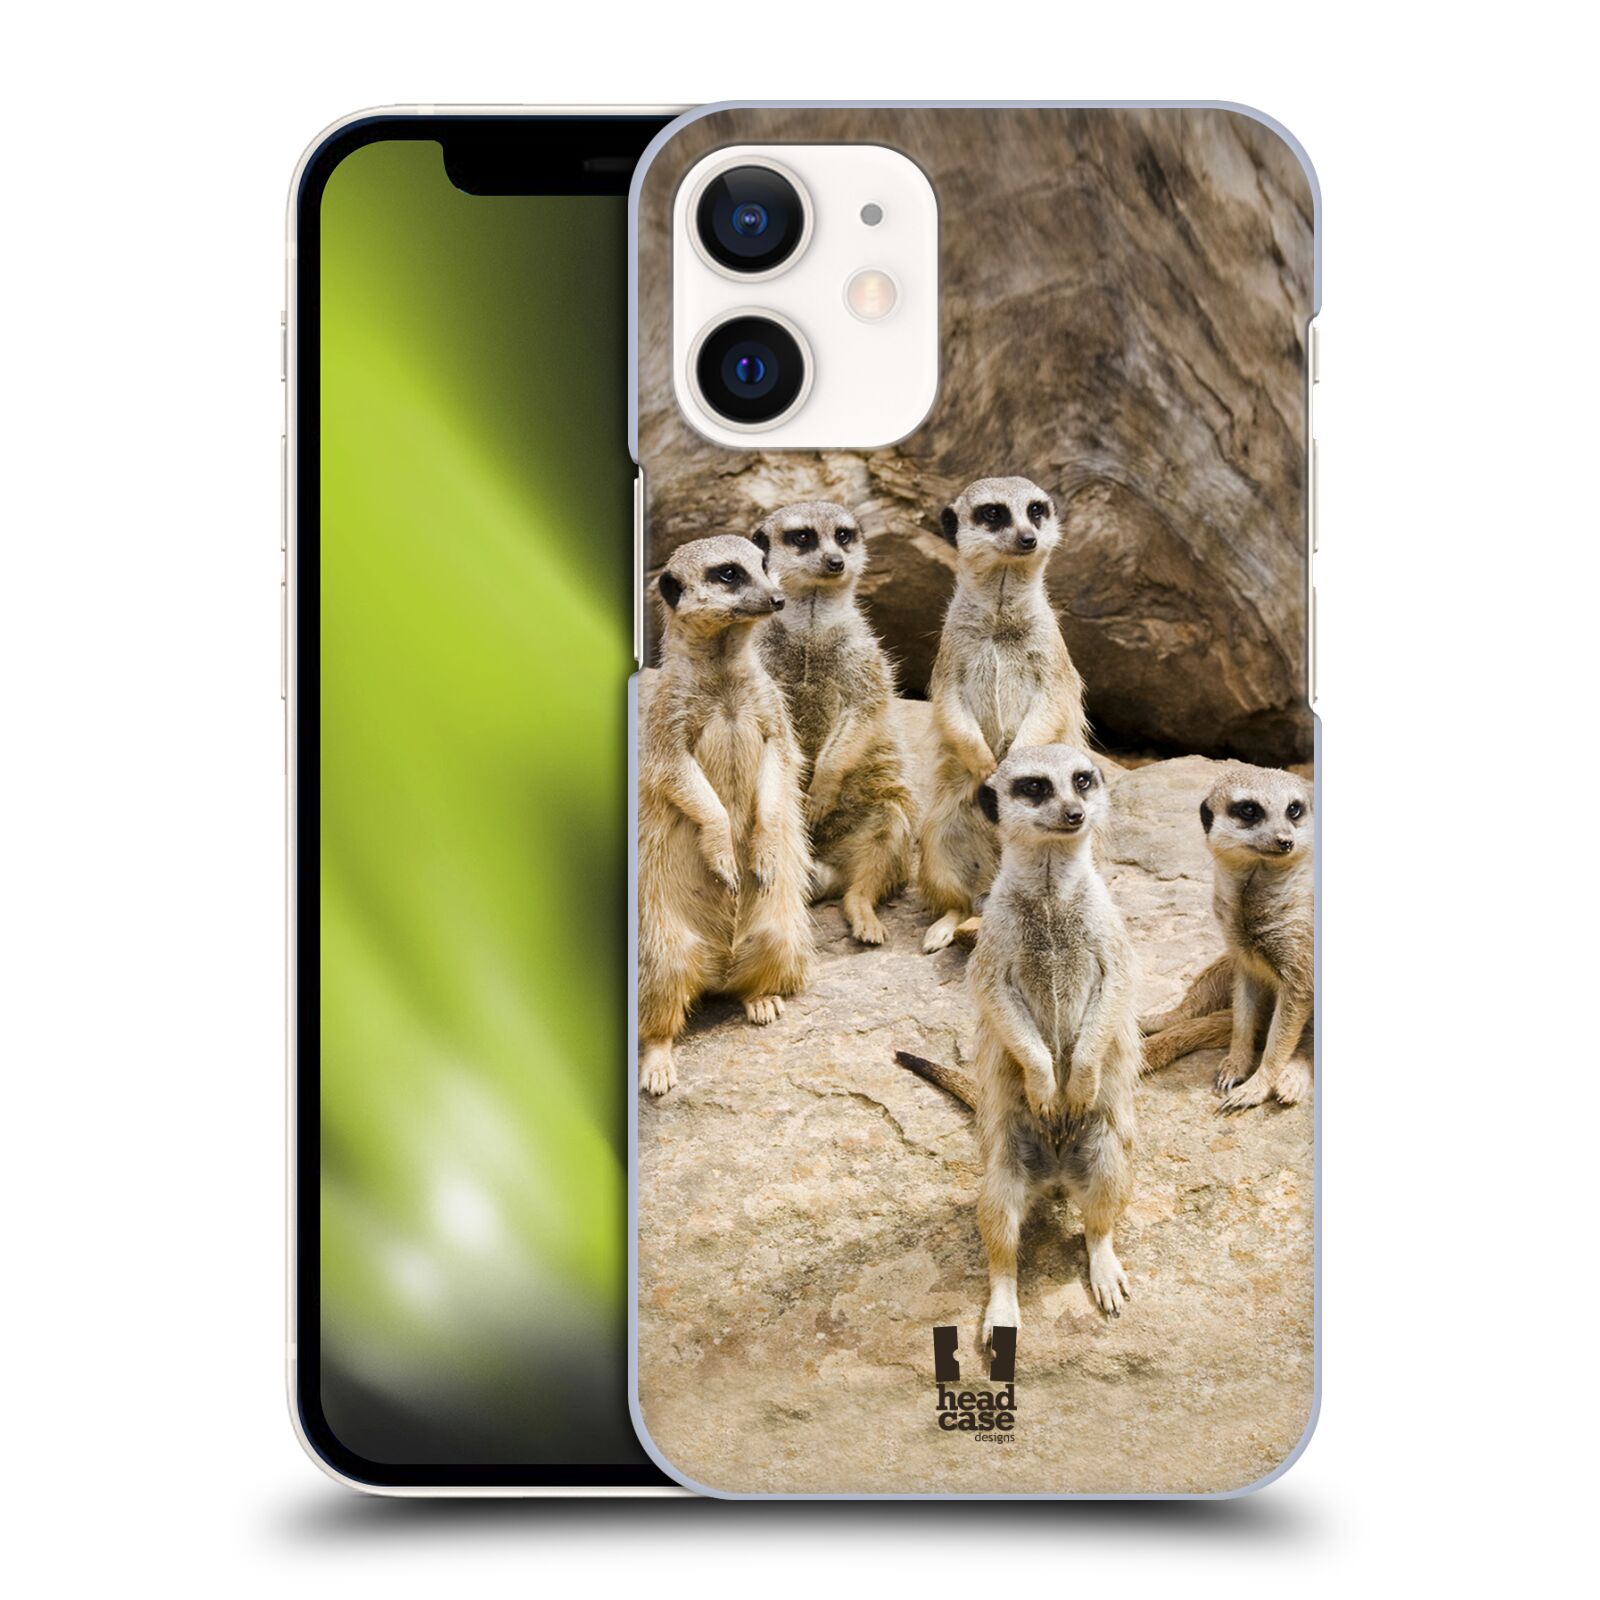 Plastový obal na mobil Apple Iphone 12 MINI vzor Divočina, Divoký život a zvířata foto SURIKATA